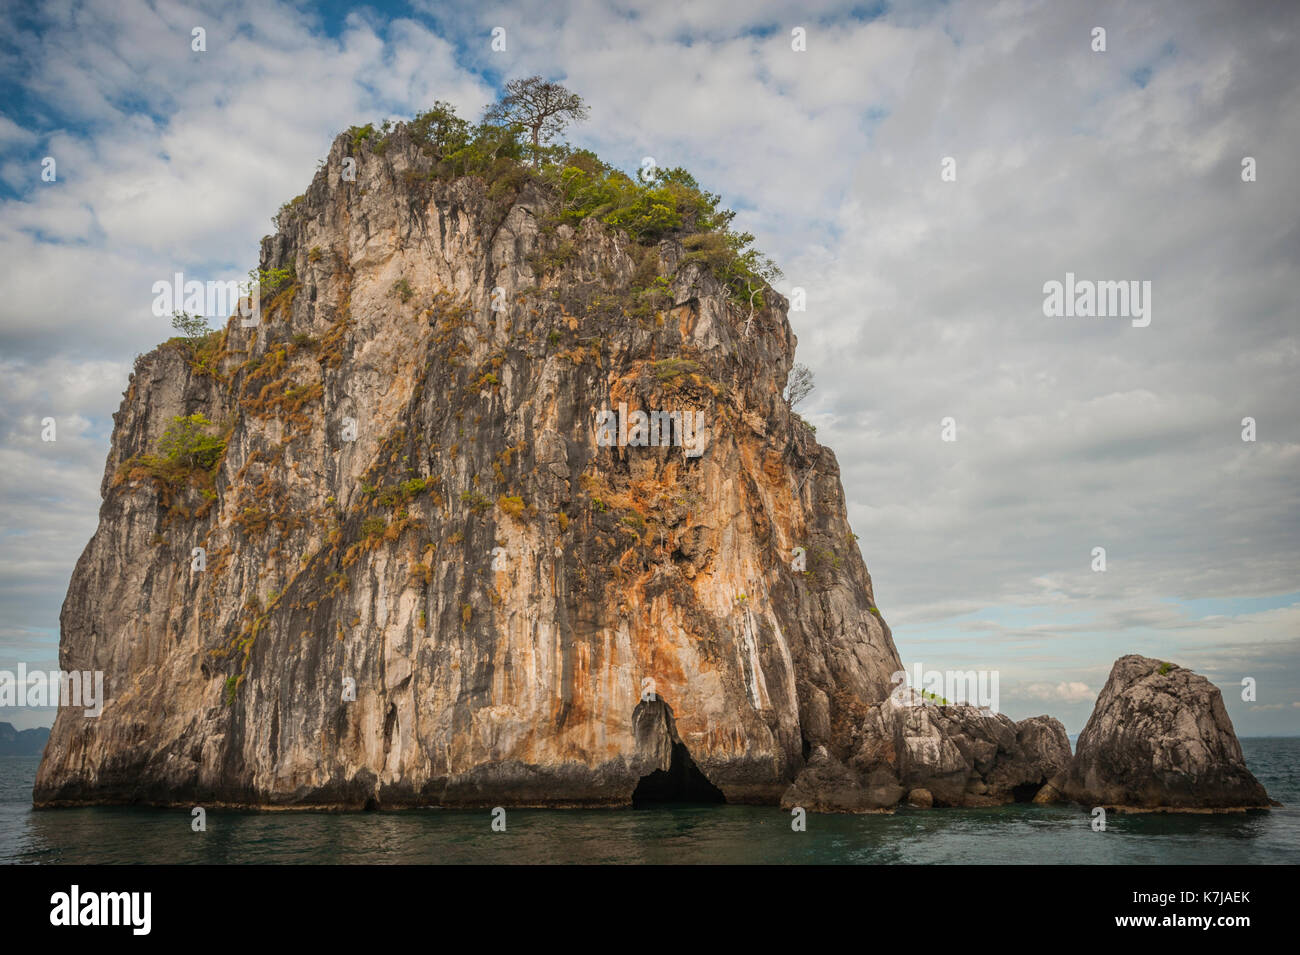 Islands around the Phang Nga Bay in the Andaman sea, Thailand. Stock Photo